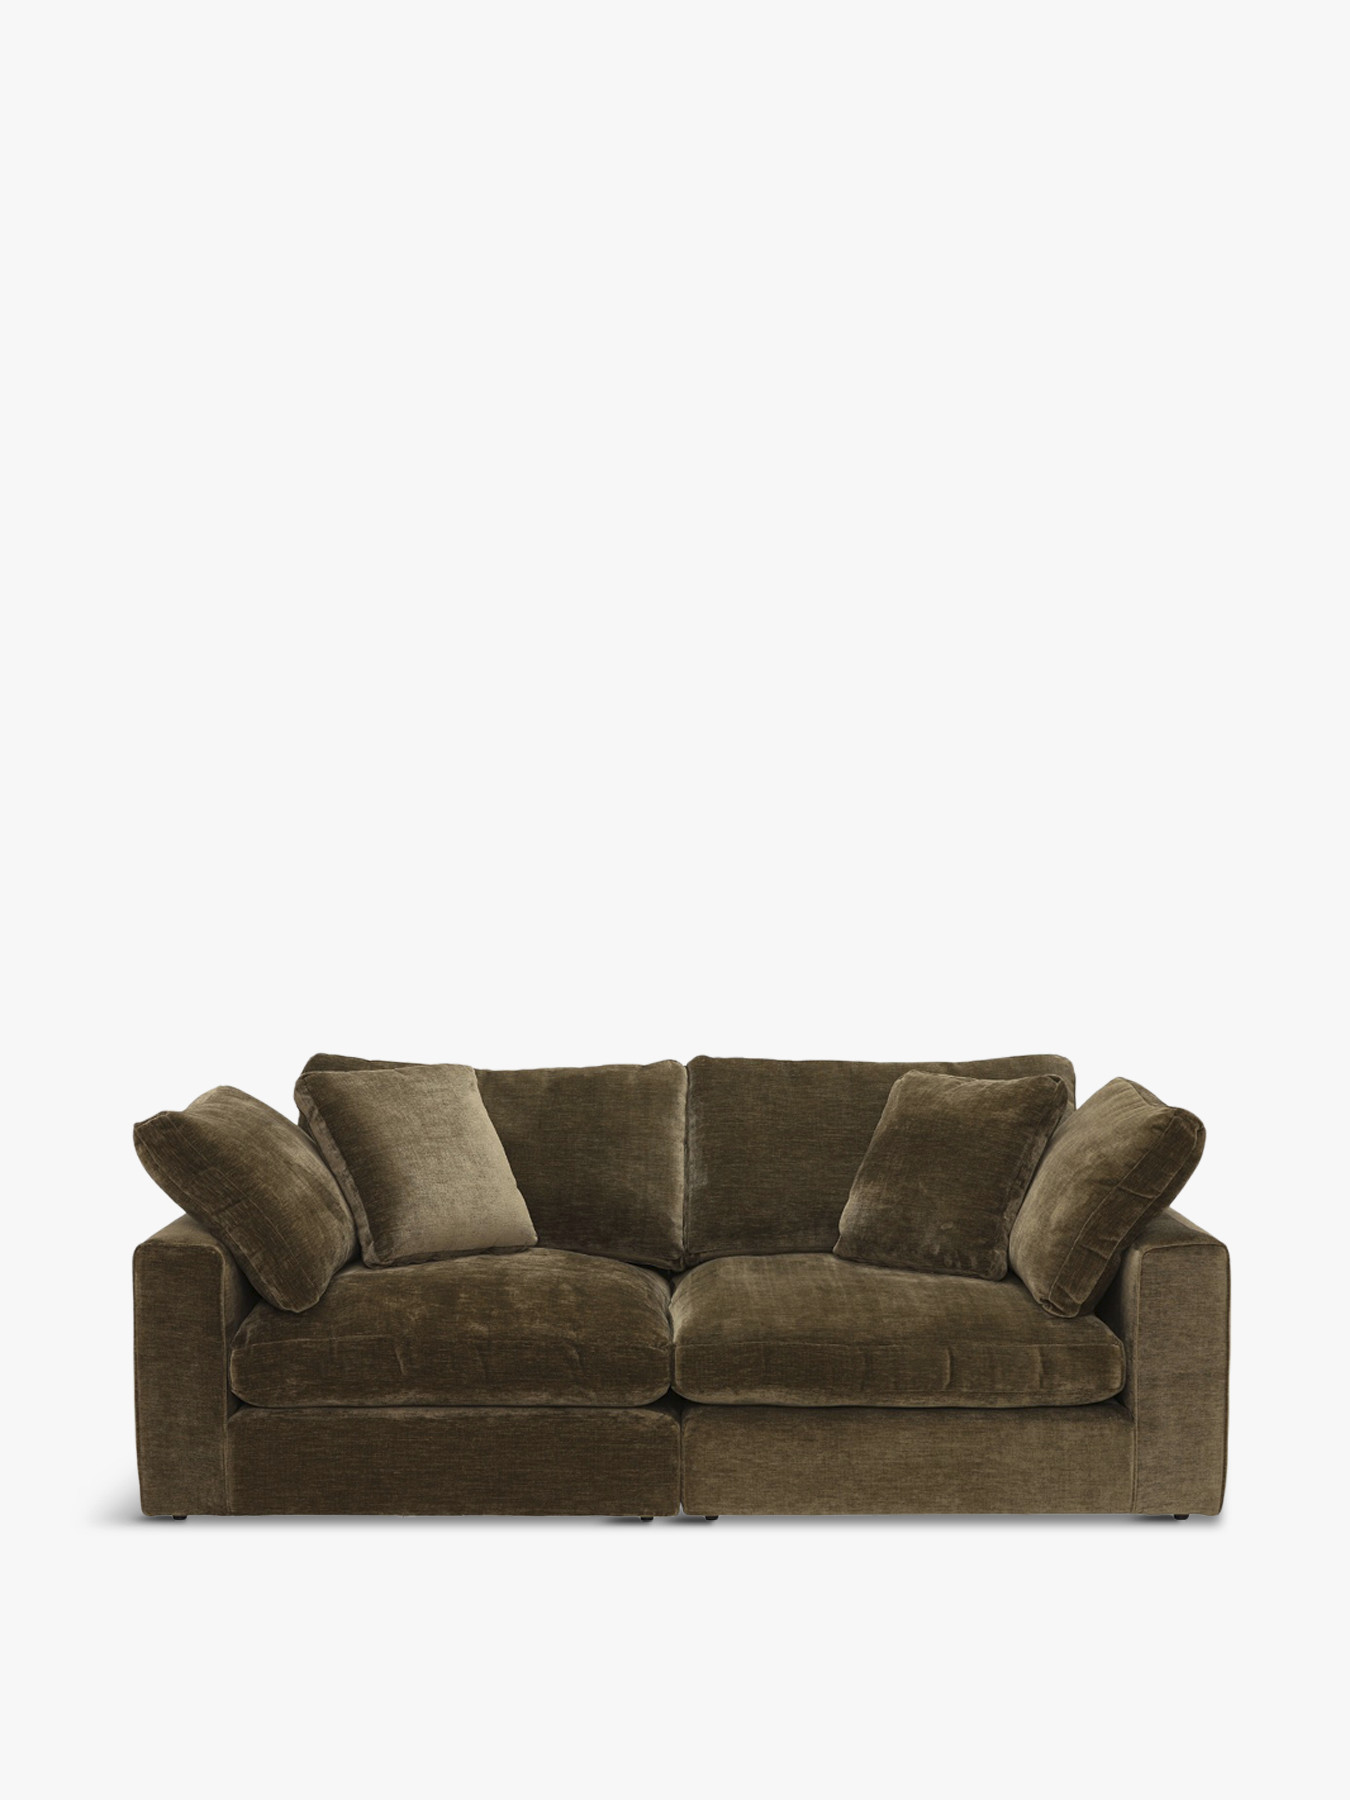 Barker and Stonehouse Artenis Modular 2 Seater Sofa | Fenwick